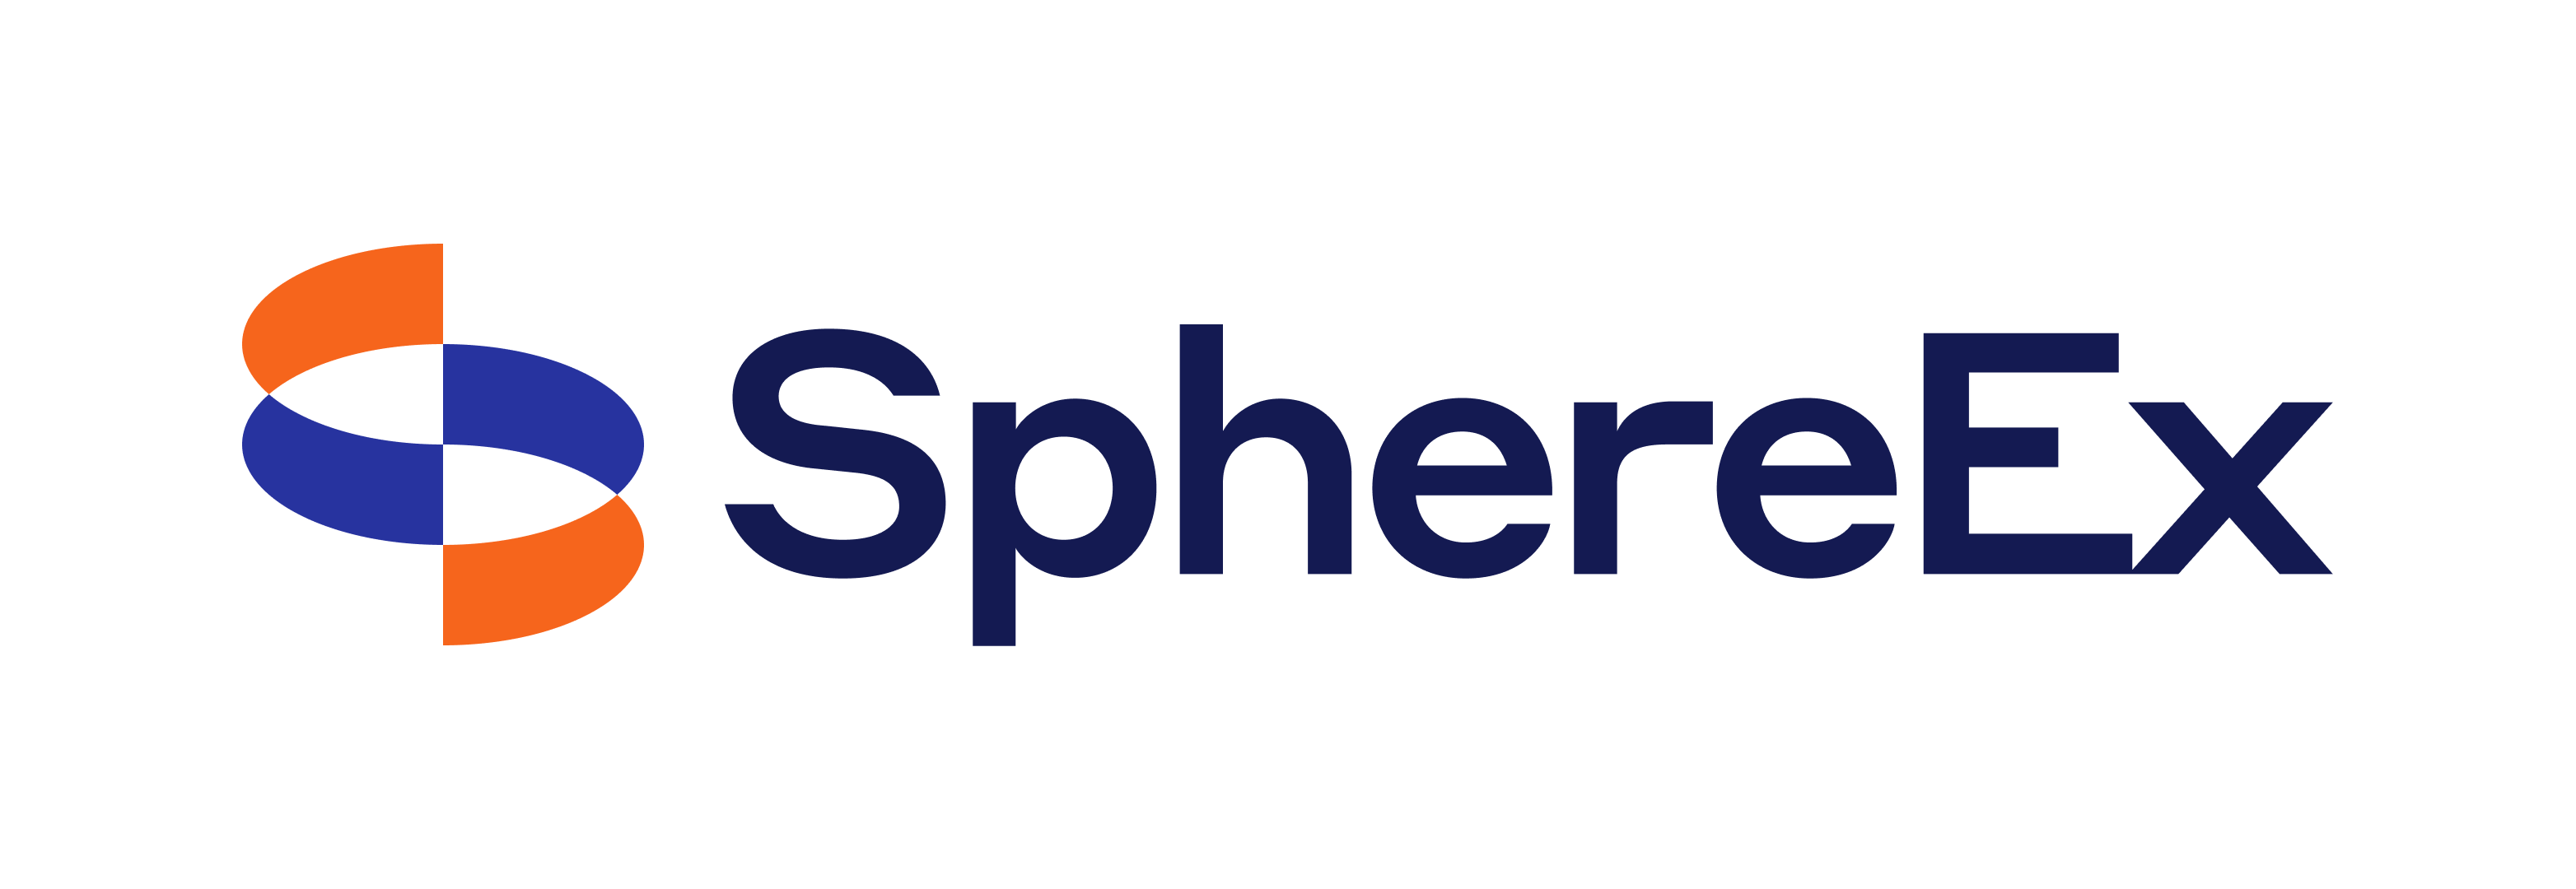 OpenSEC - SphereEx 中文社区|开源异构分布式数据服务交流平台